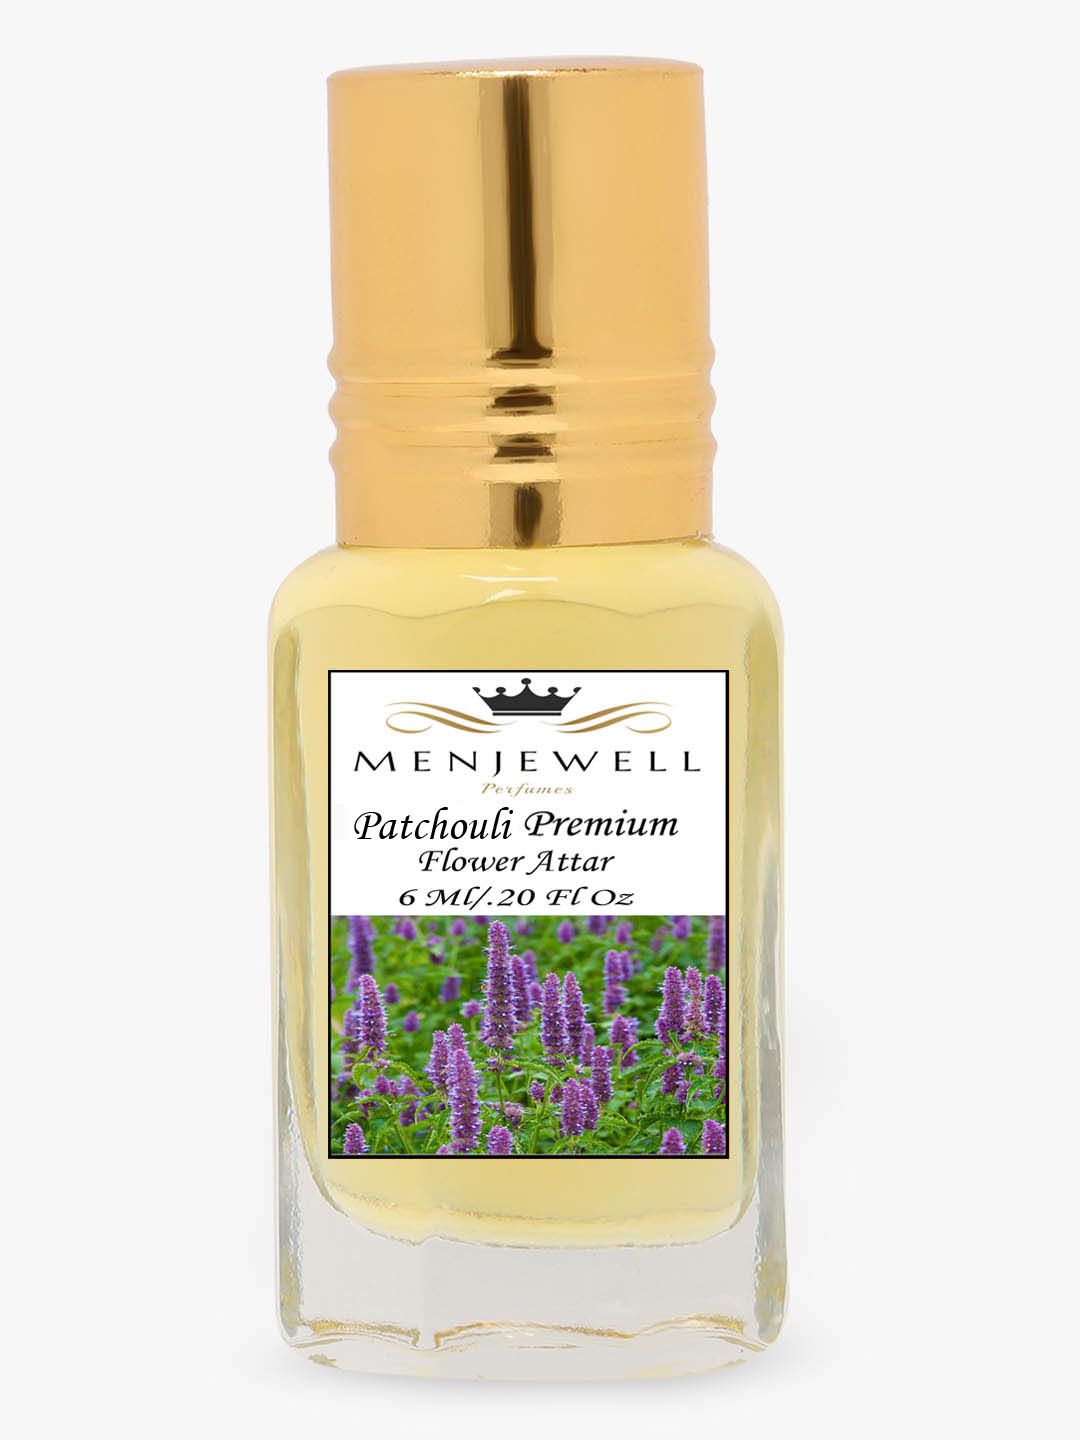 Menjewell Perfumes Patchouli Premium Flower Attar 6 ml Price in India